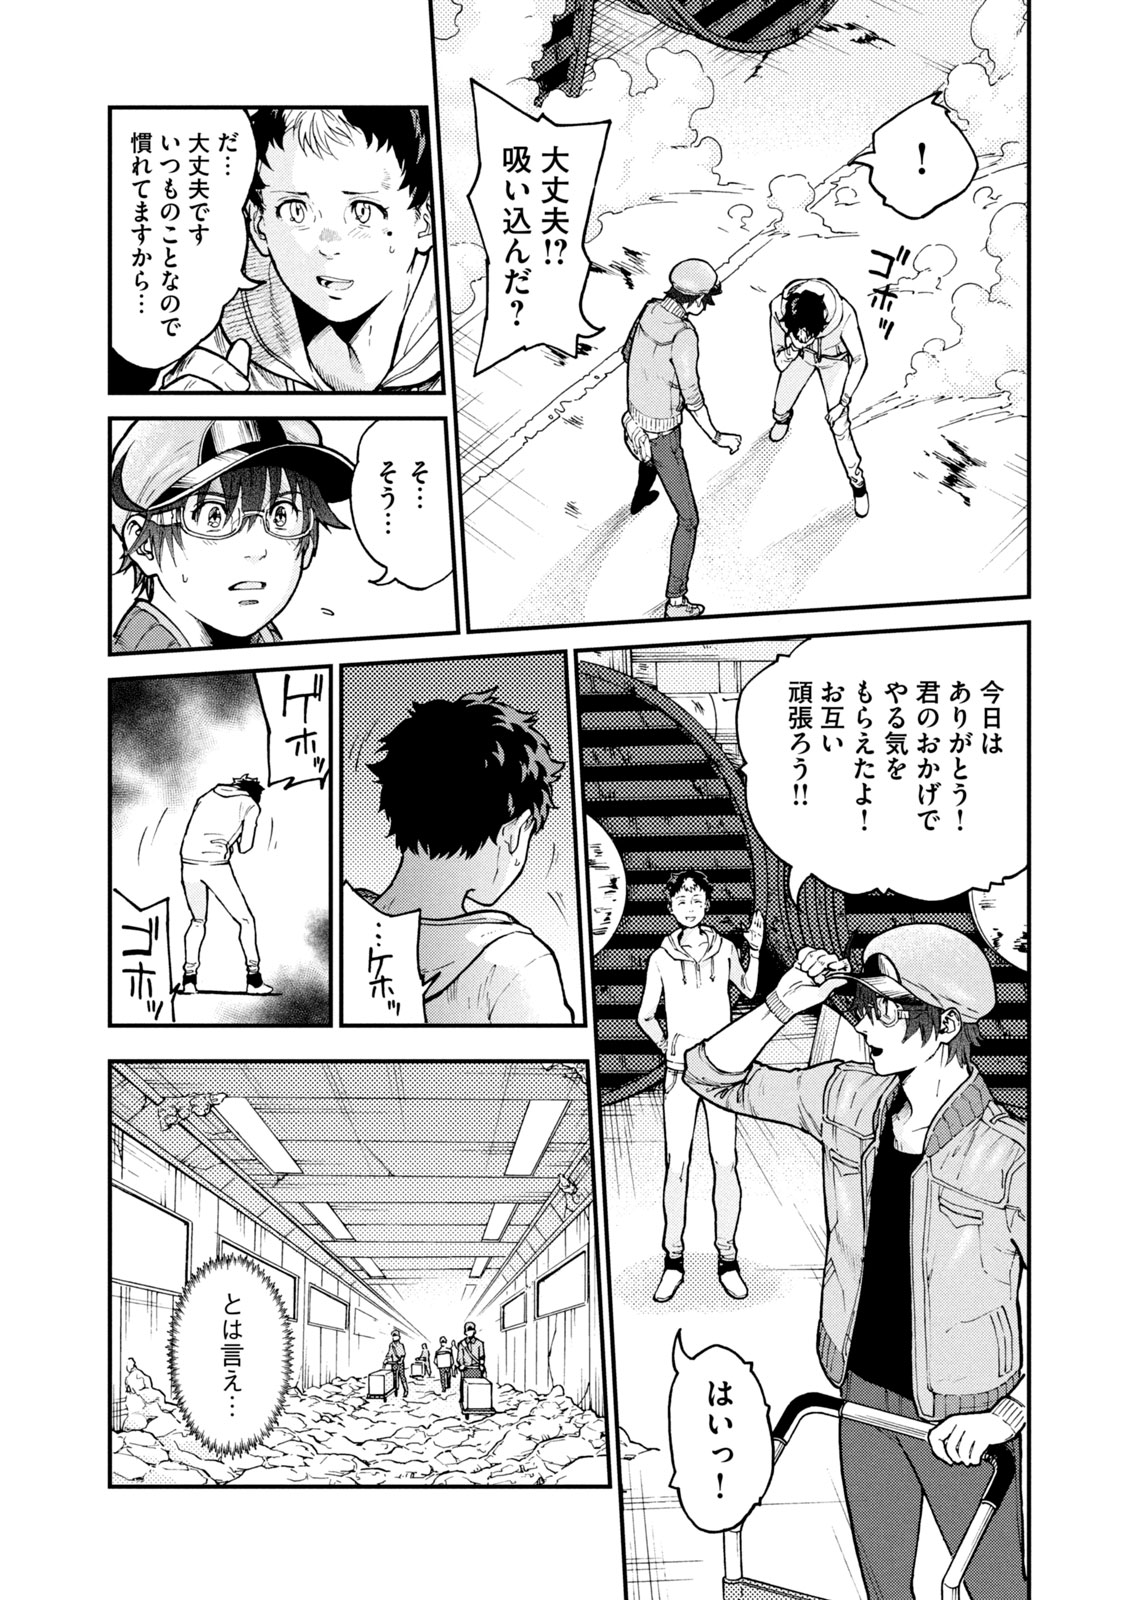 Hataraku Saibou BLACK - Chapter 33 - Page 16